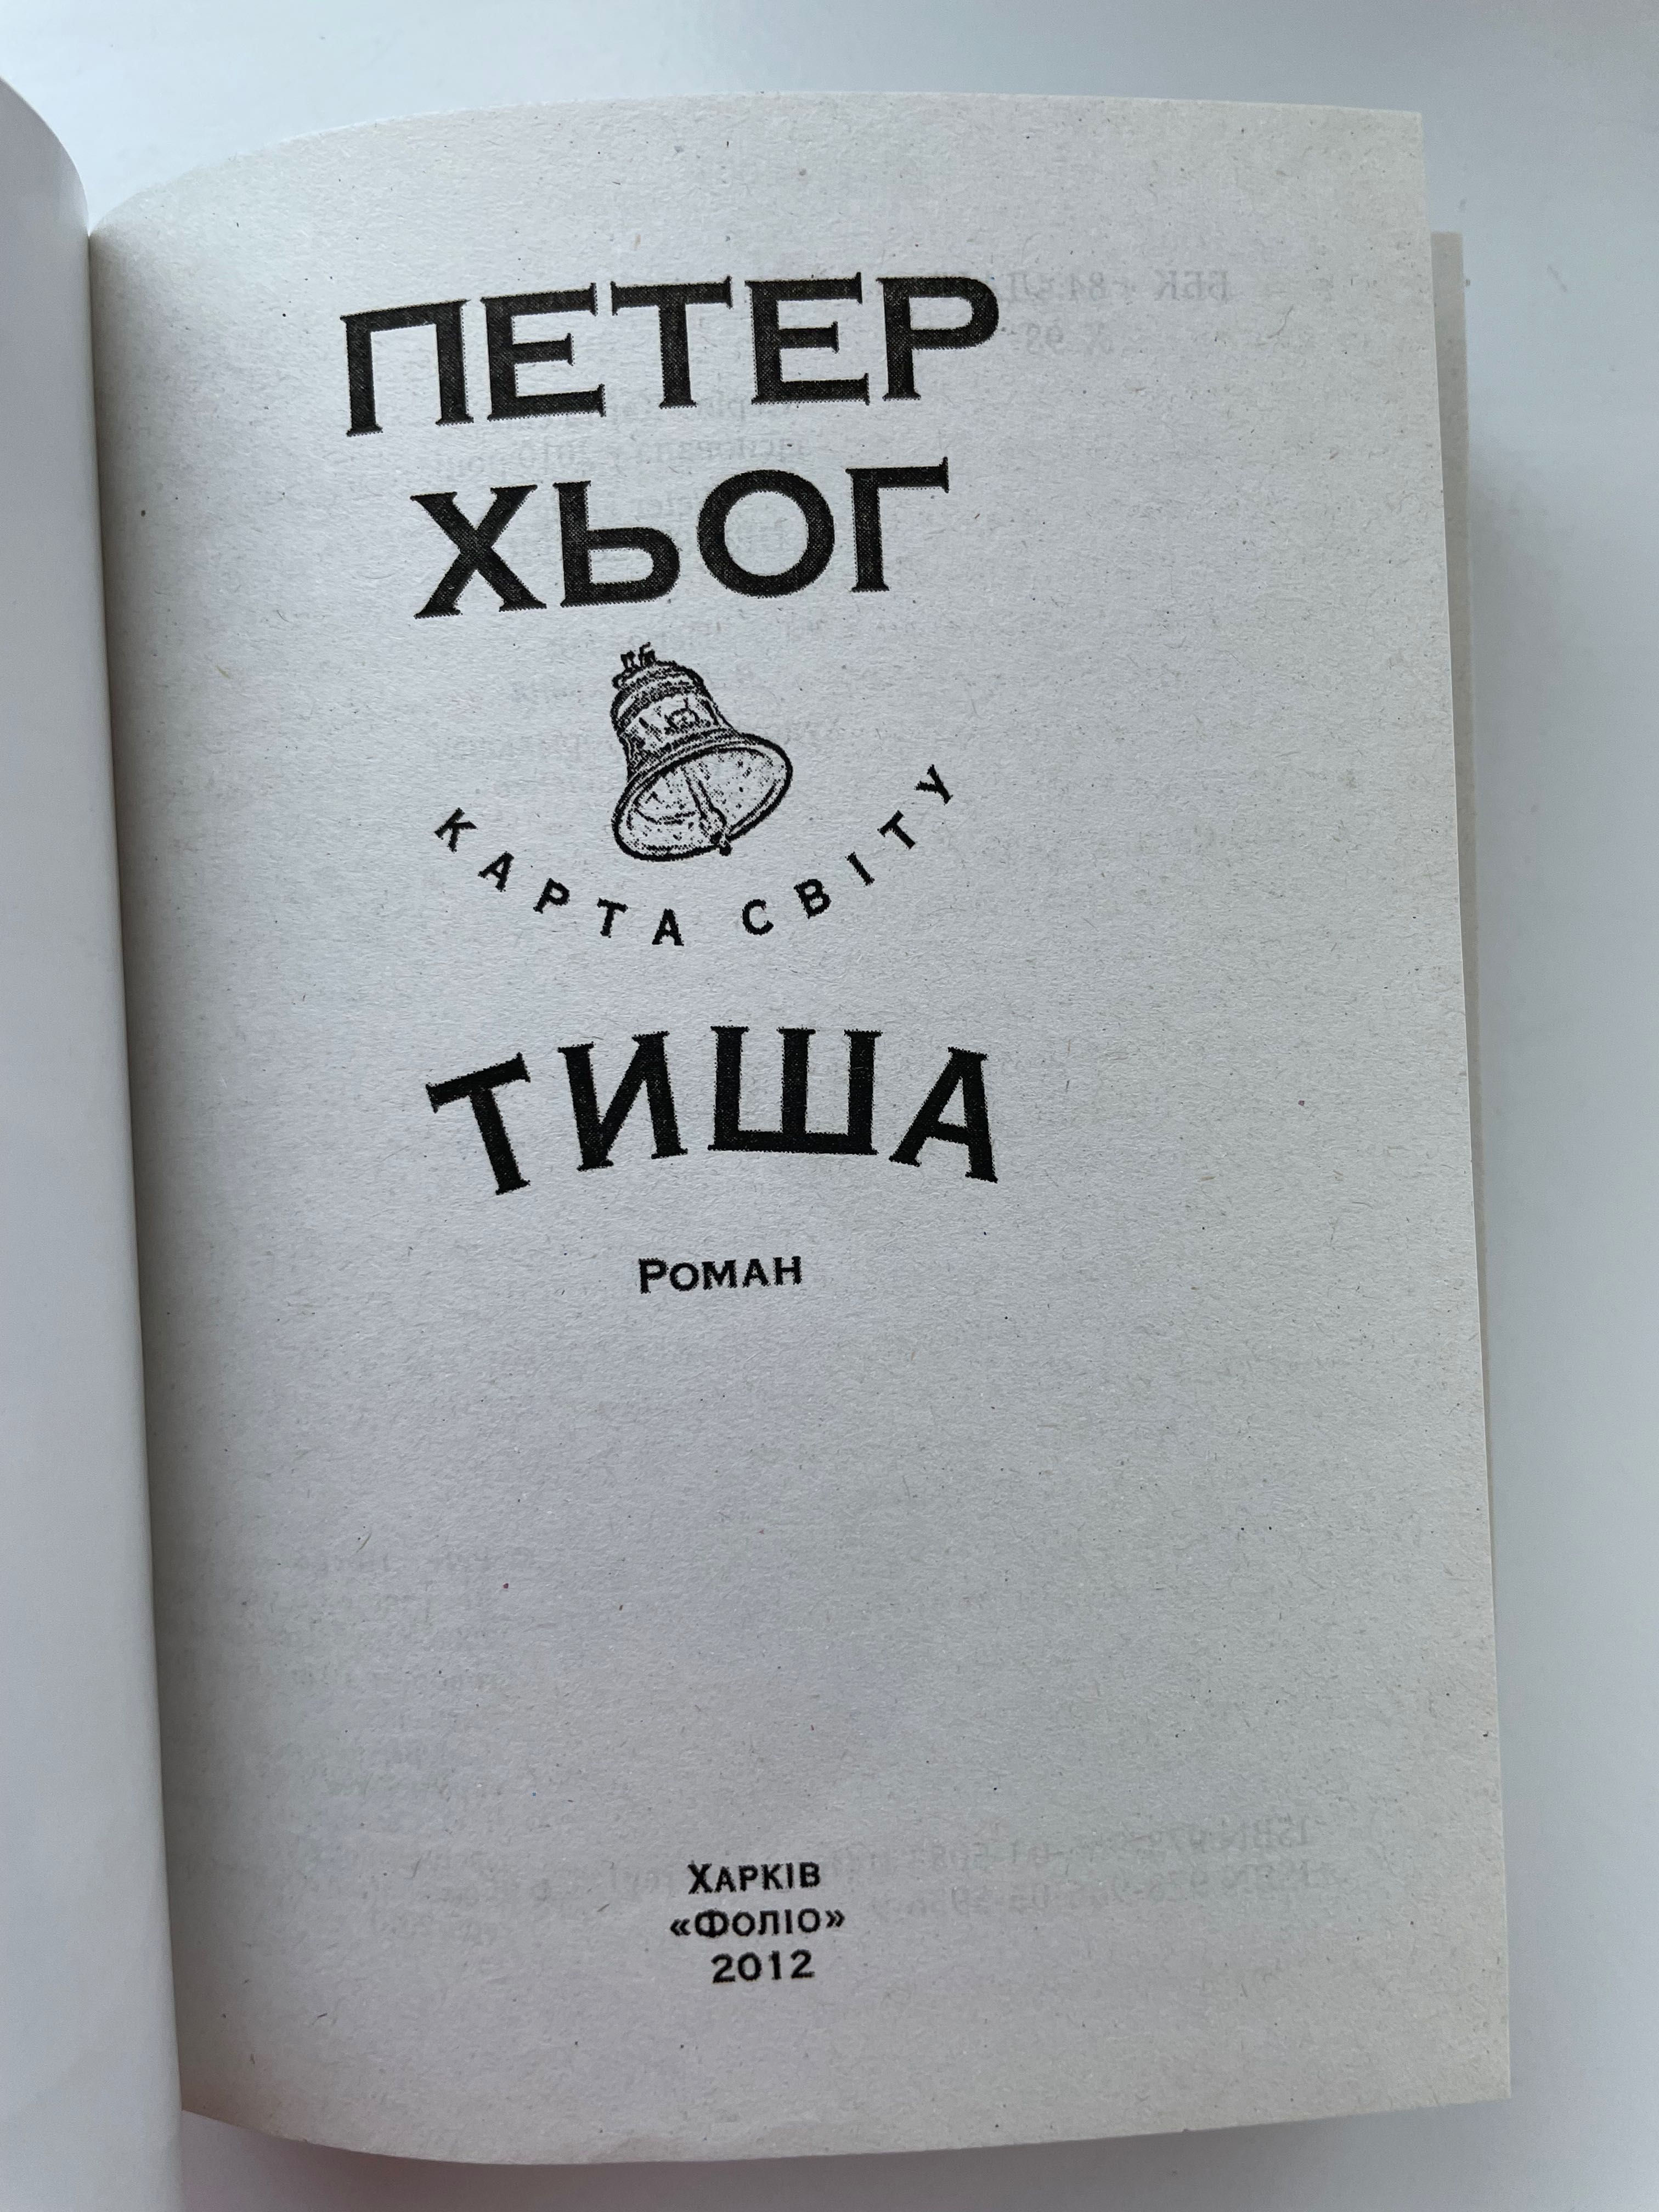 Книга роман «Тиша» автора Петера Хьога